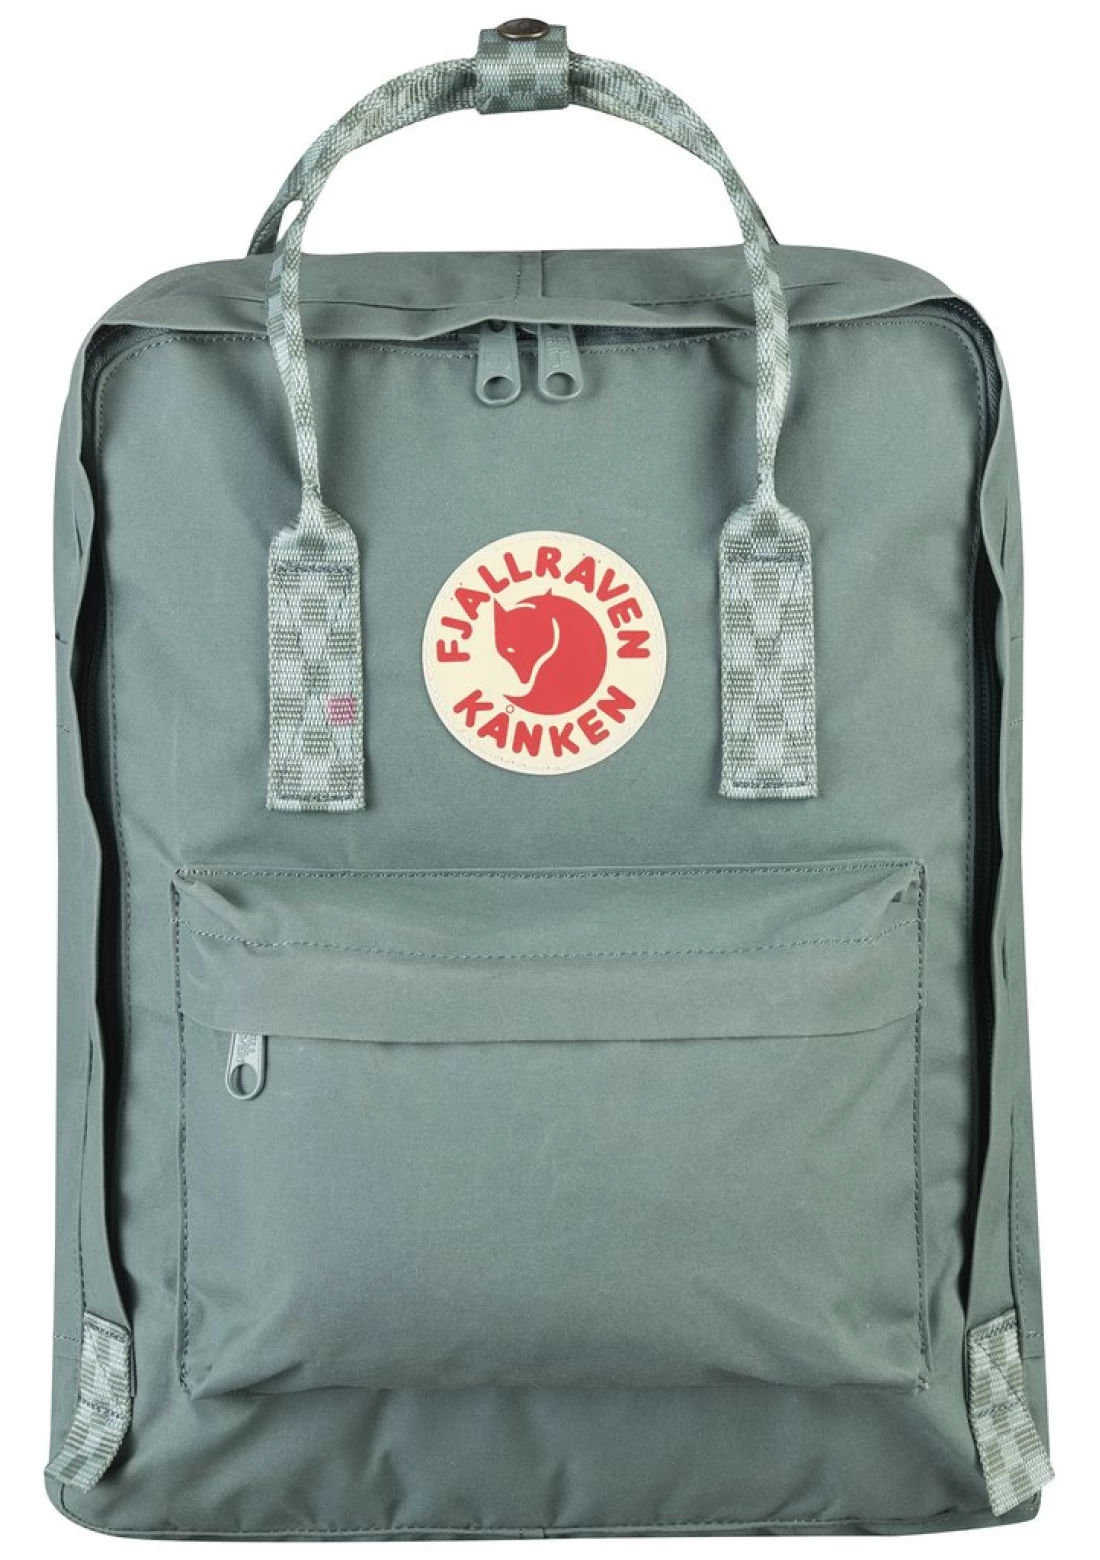 Fjallraven Kanken Classic Backpack for Everyday